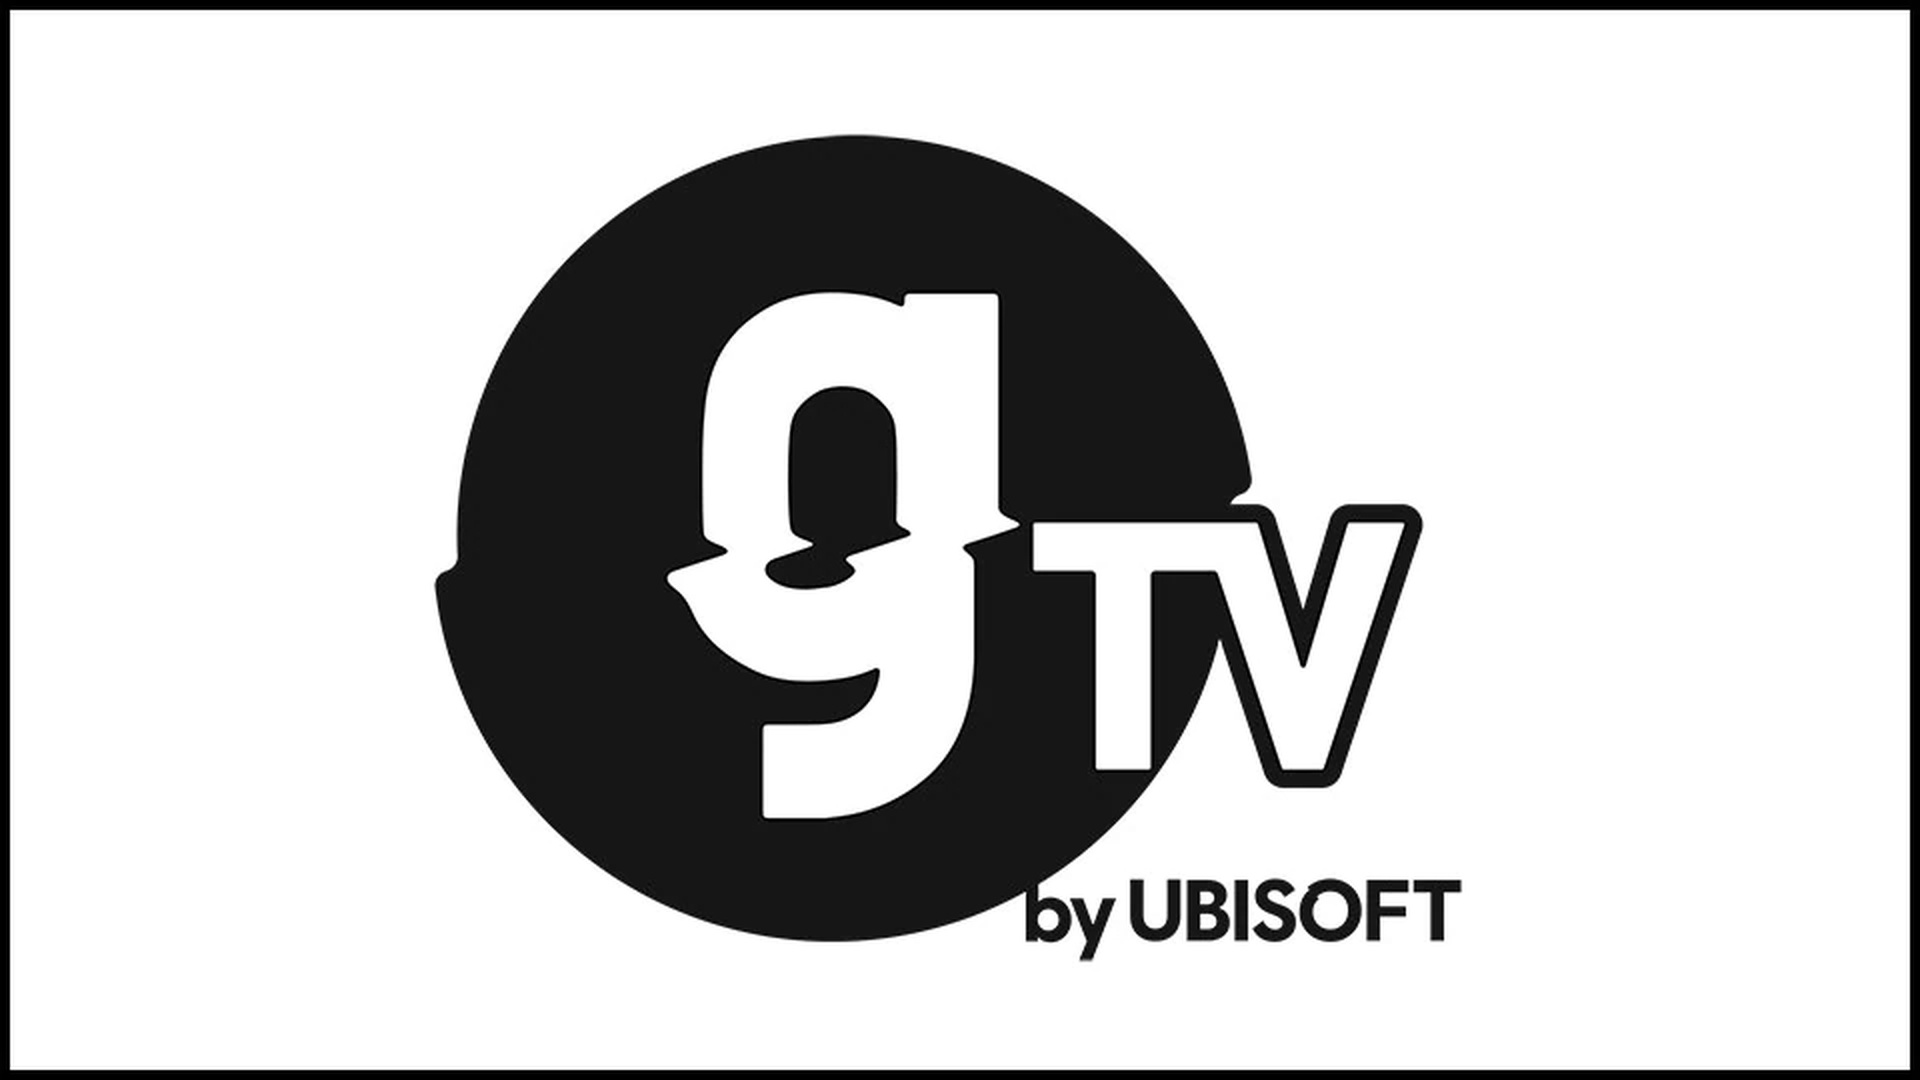 Ubisoft gTV